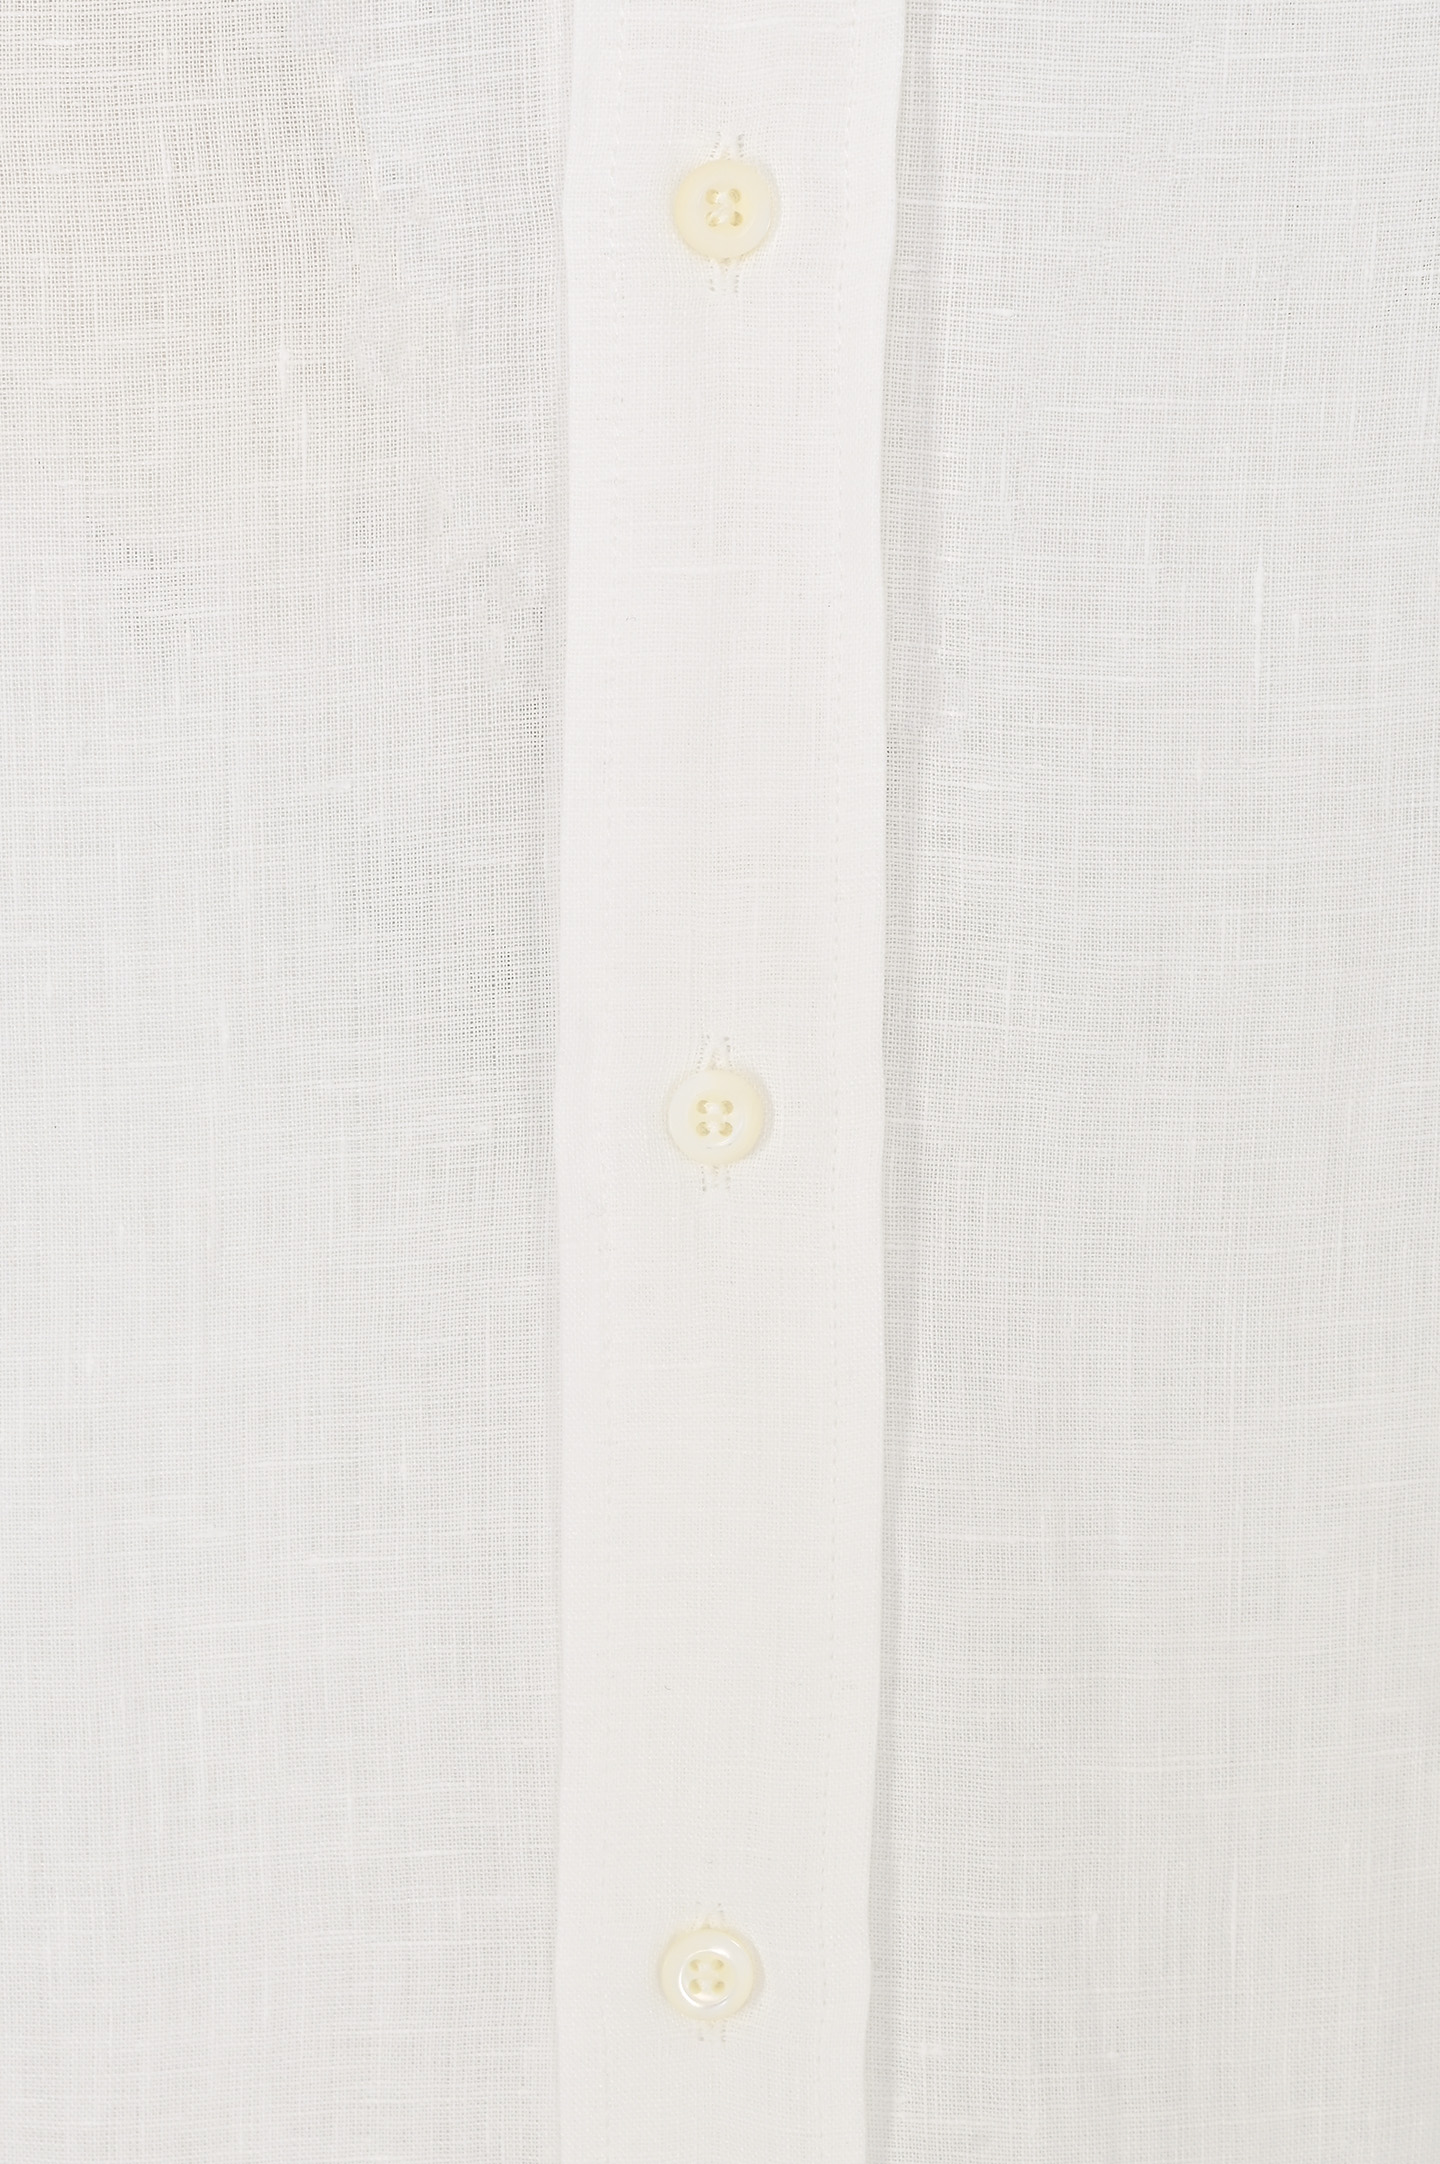 Рубашка BRUNELLO  CUCINELLI MB6500028, цвет: Белый, Мужской